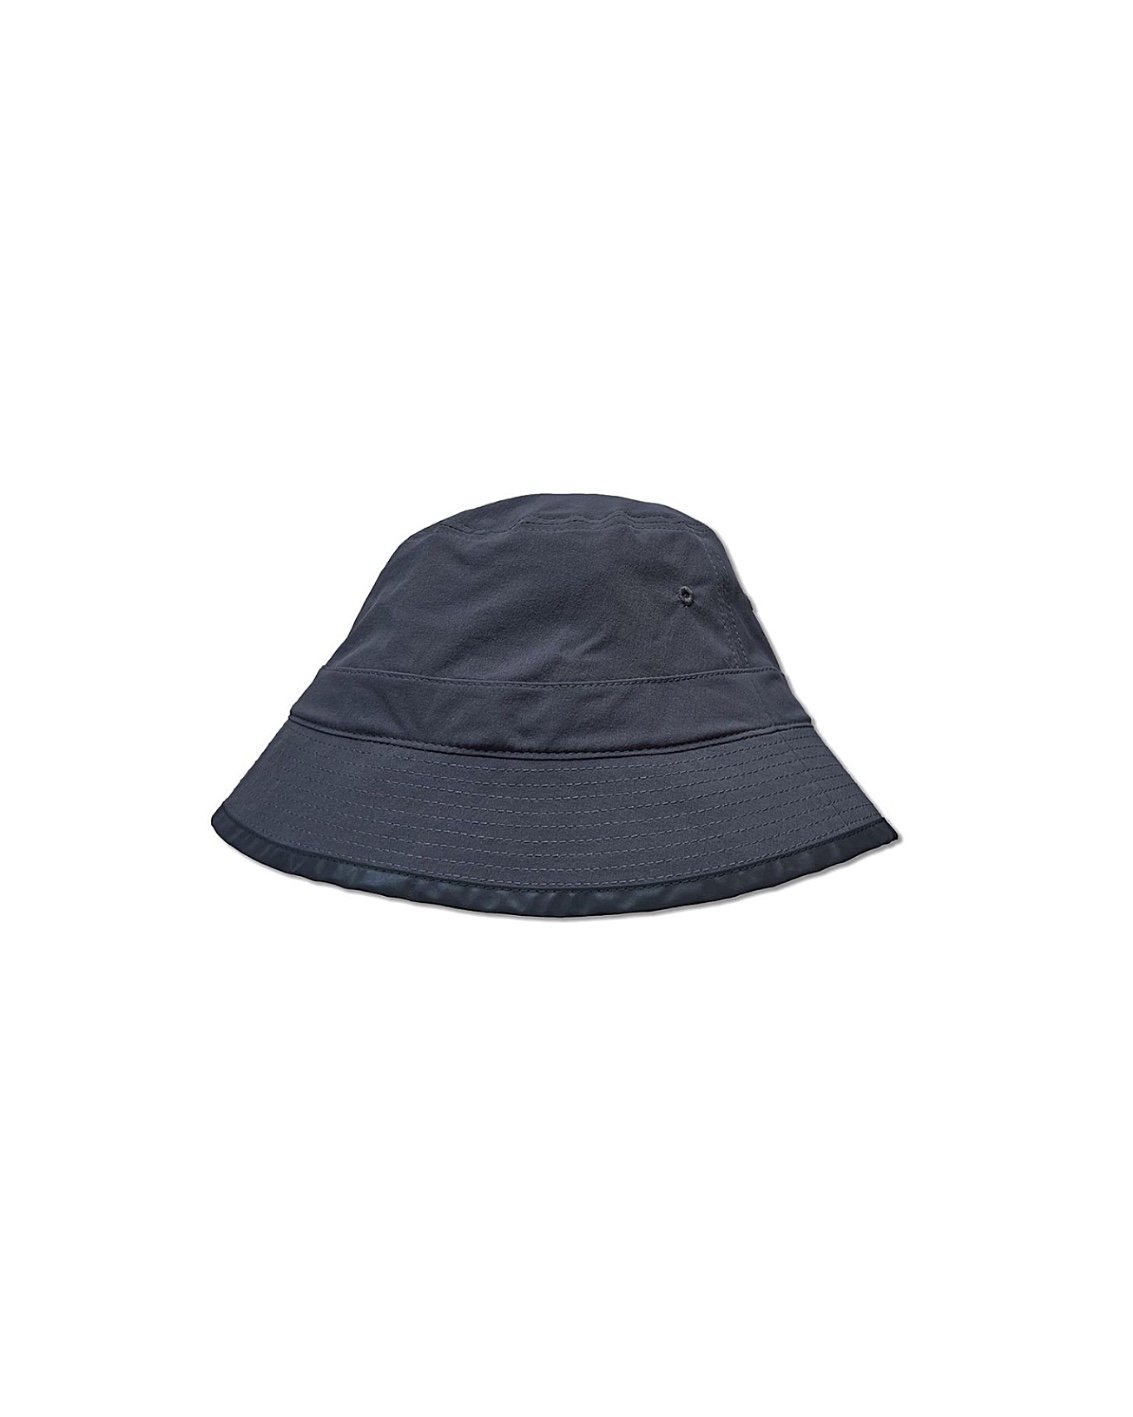 COMFORTABLE REASON「Stretch Senior Hat」charcoal.